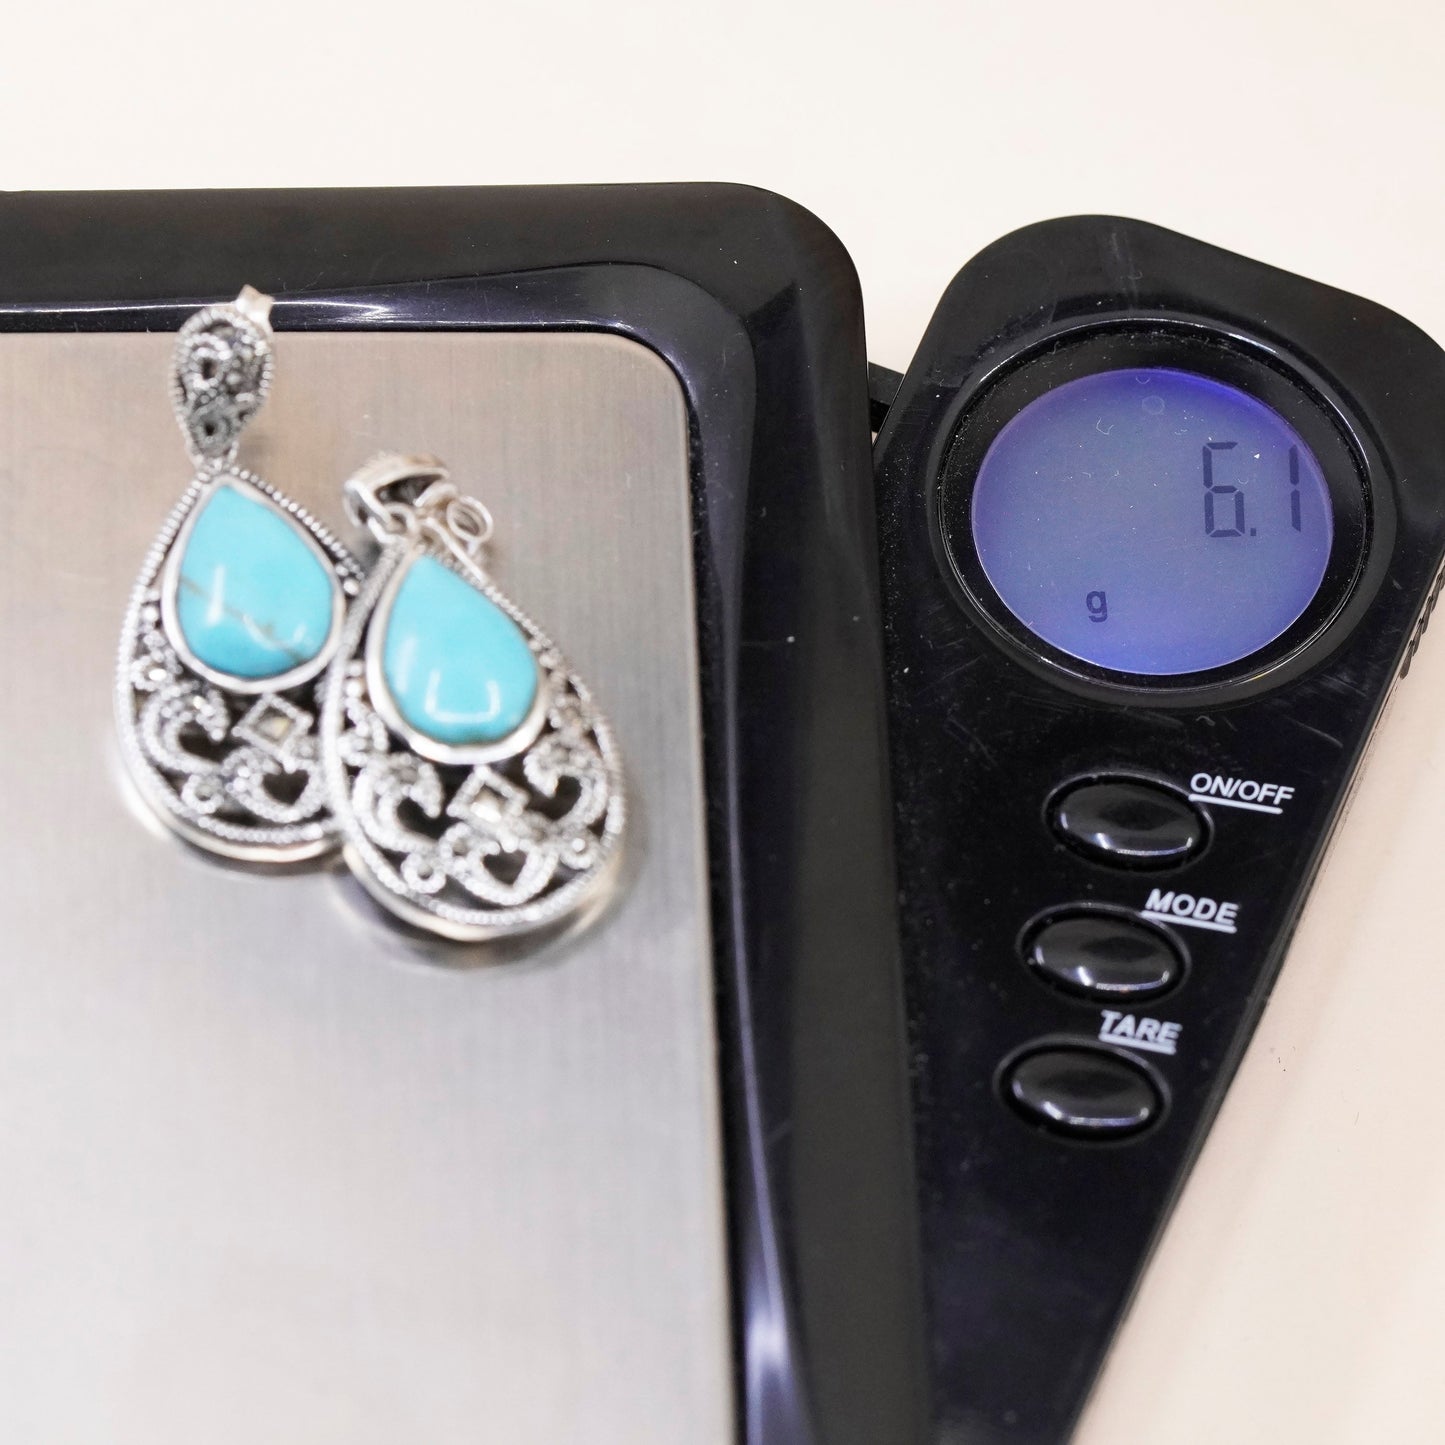 Vintage Sterling 925 silver handmade earrings with teardrop turquoise marcasite